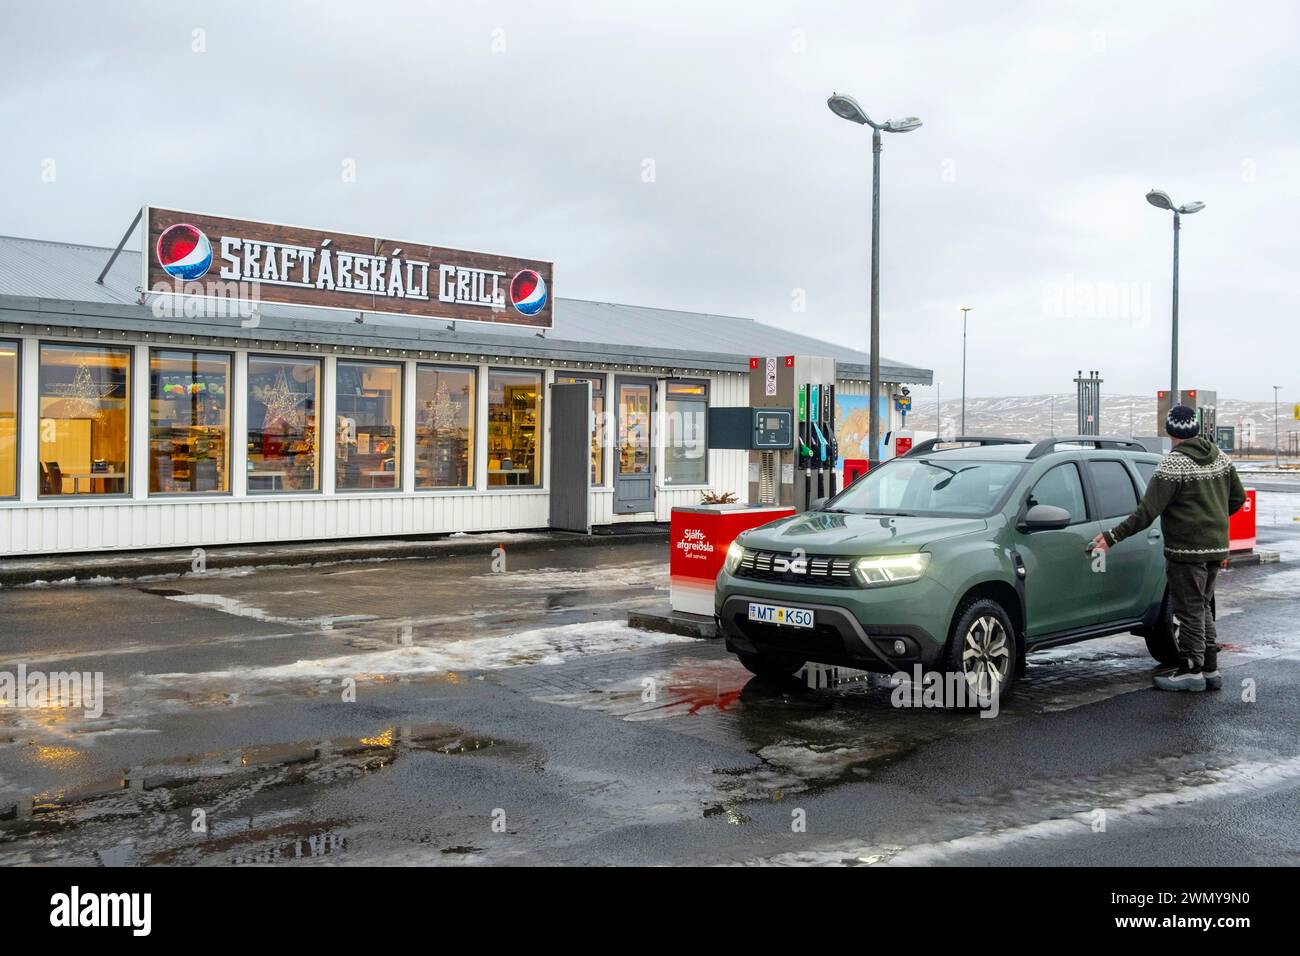 Island, Südküste, Vik, Tankstelle und Skaftarskali Grill Café Stockfoto